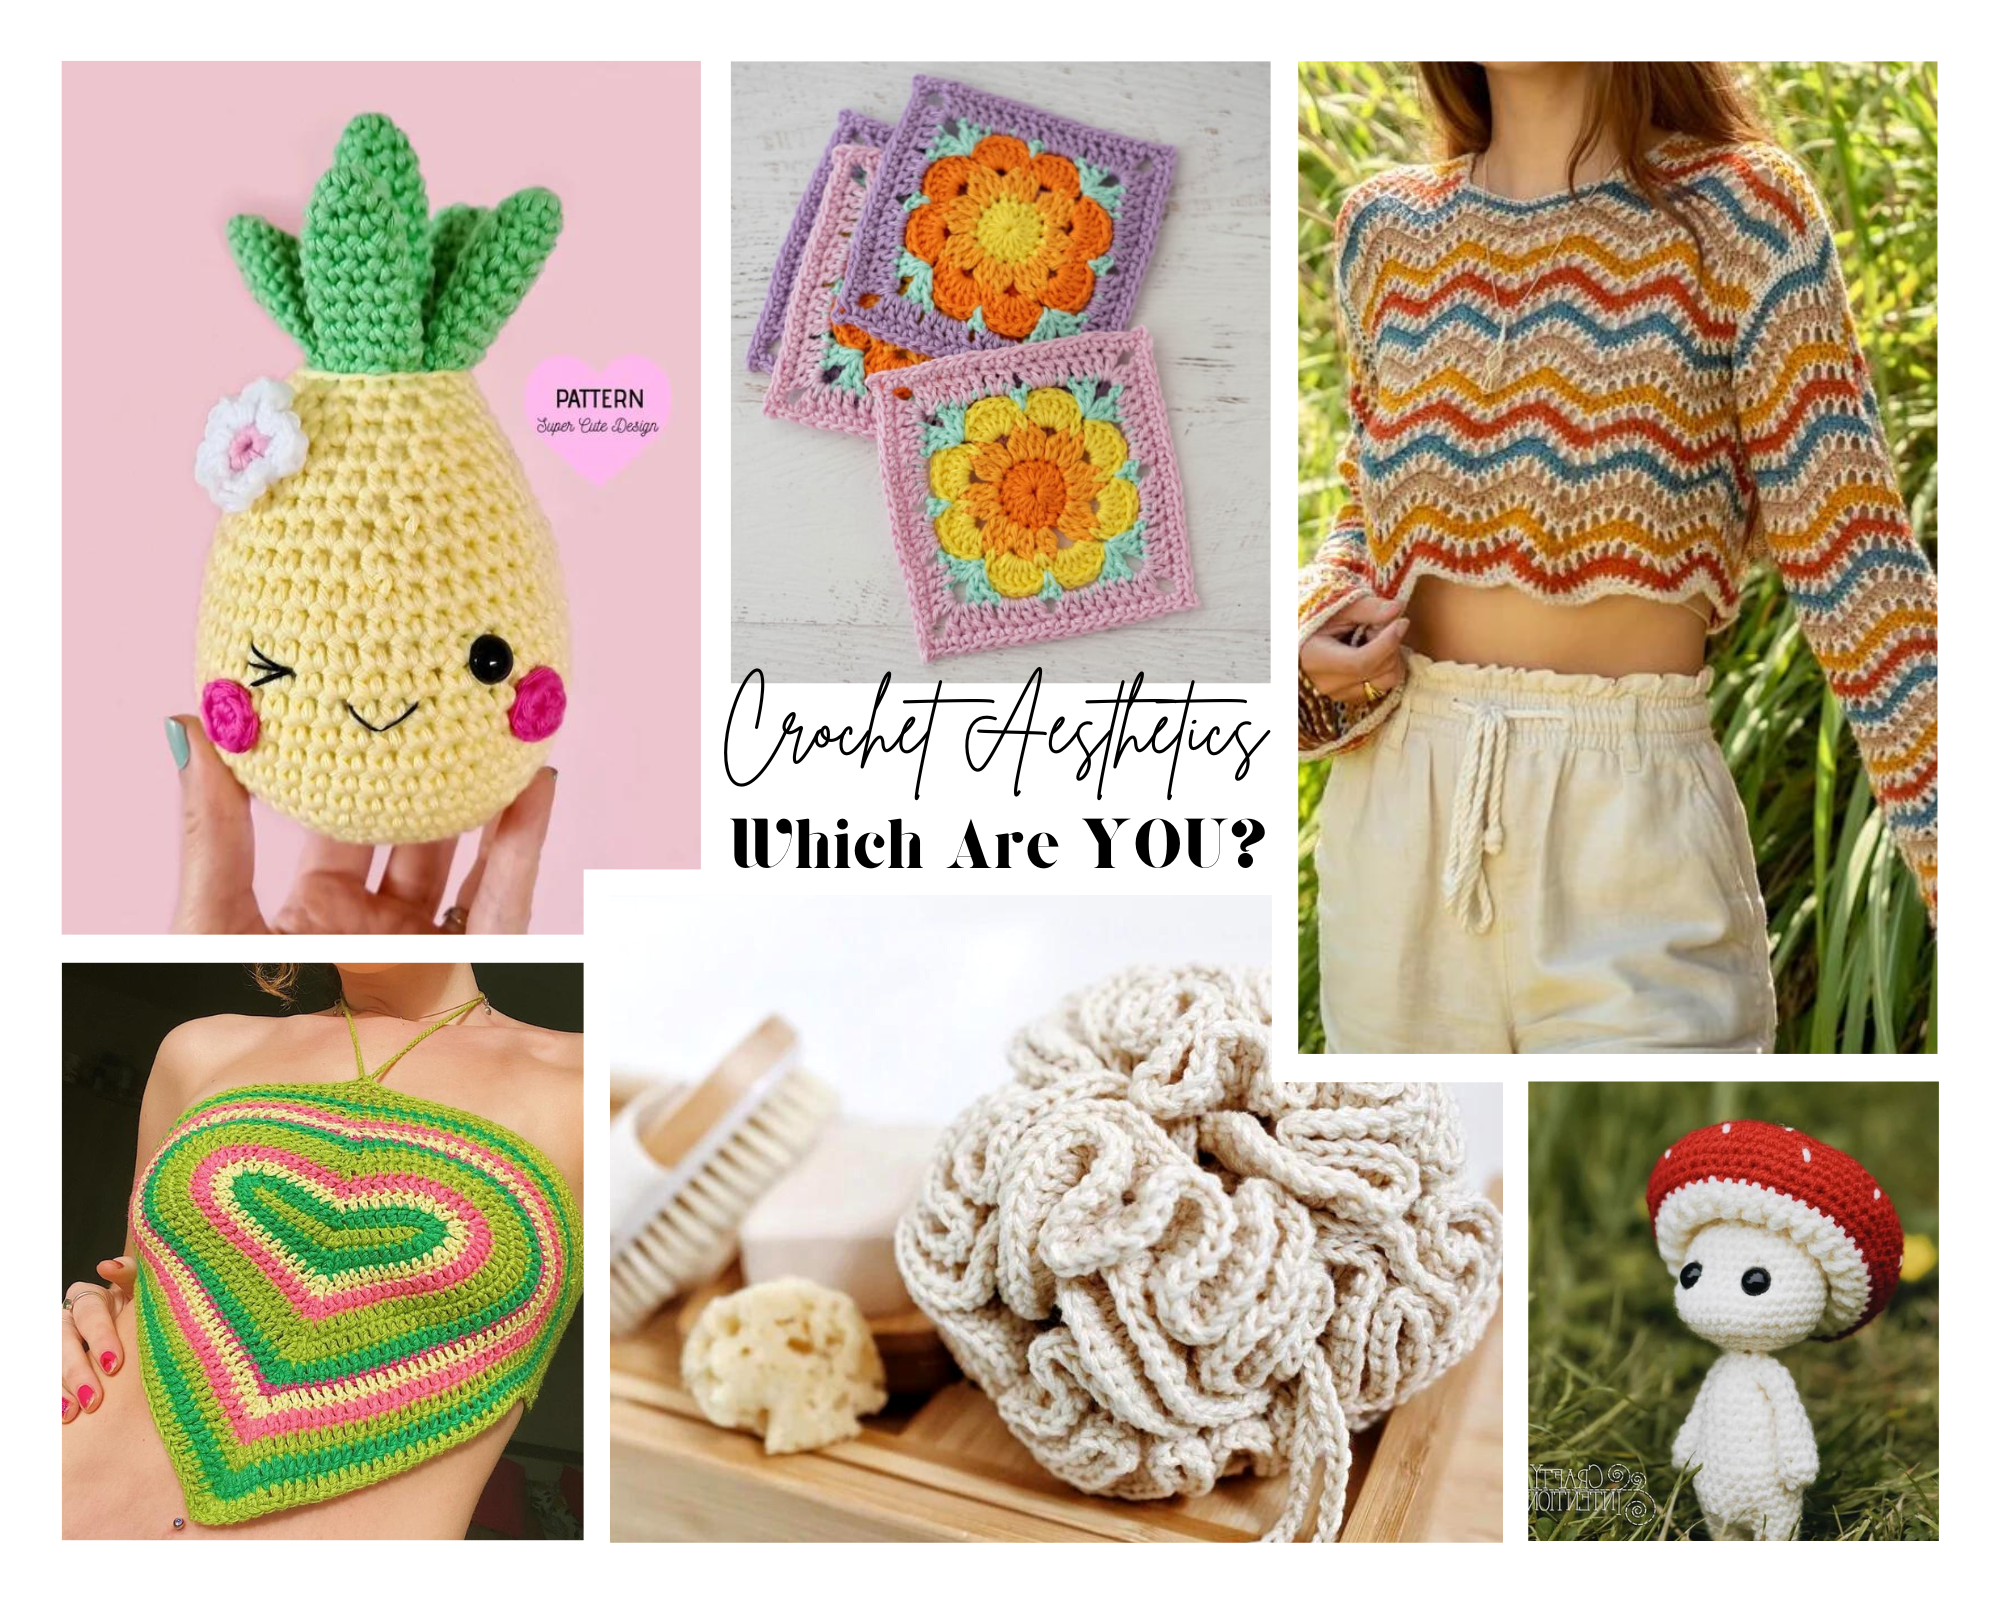 Beautiful Crochet Stuff : Simple Crochet Patterns Perfect for